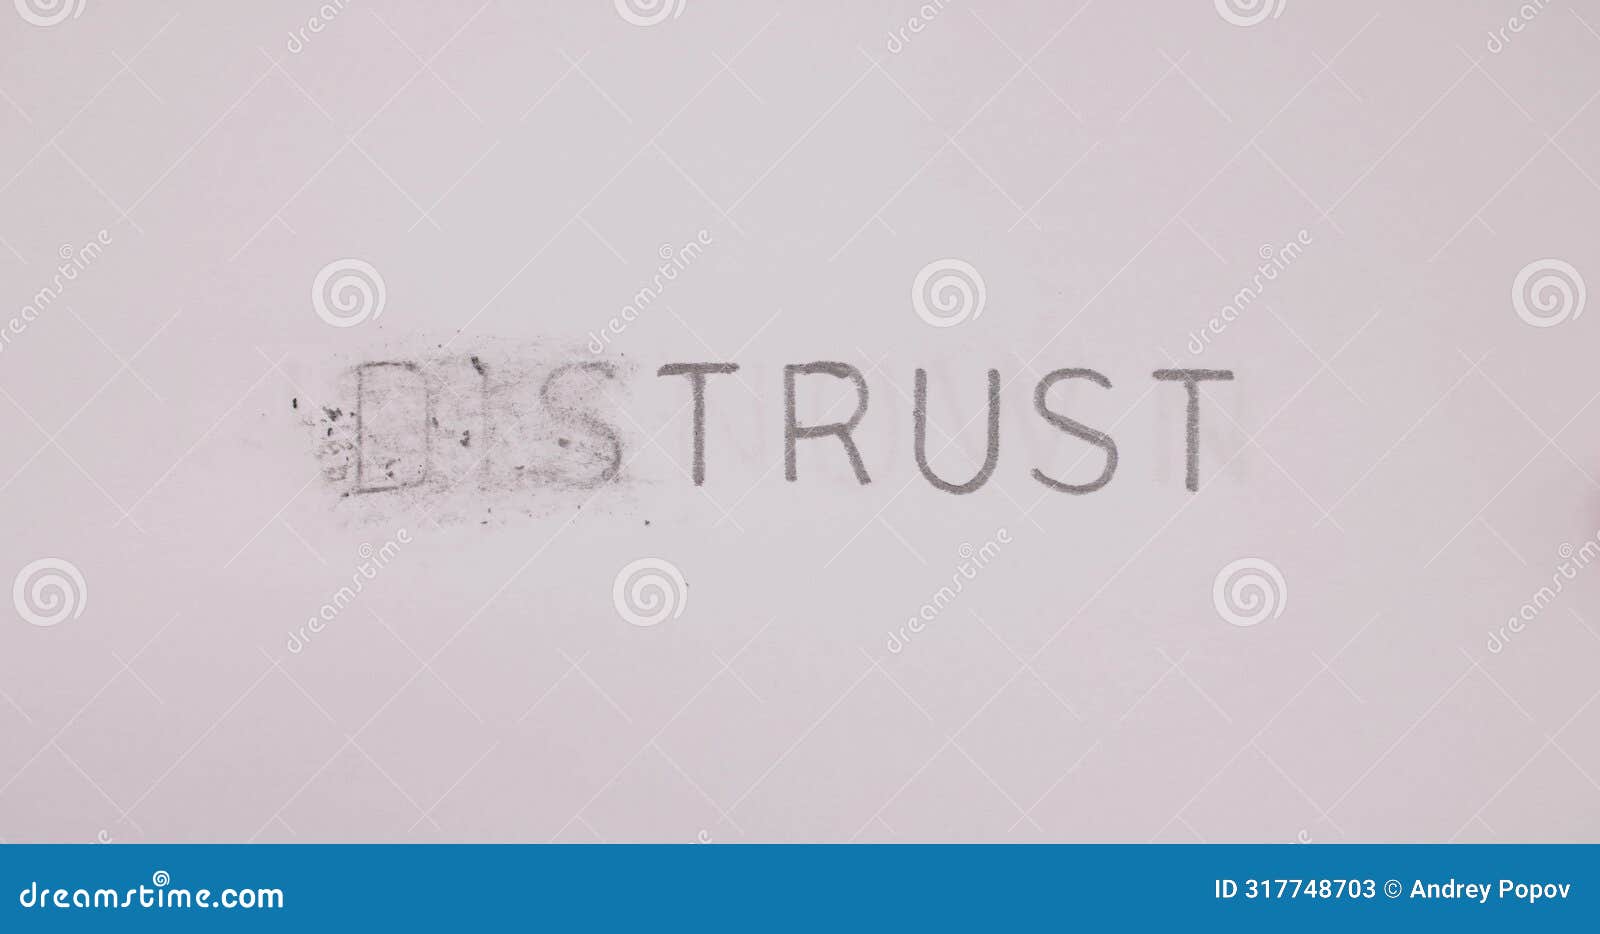 distrust word change to trust. partner choice